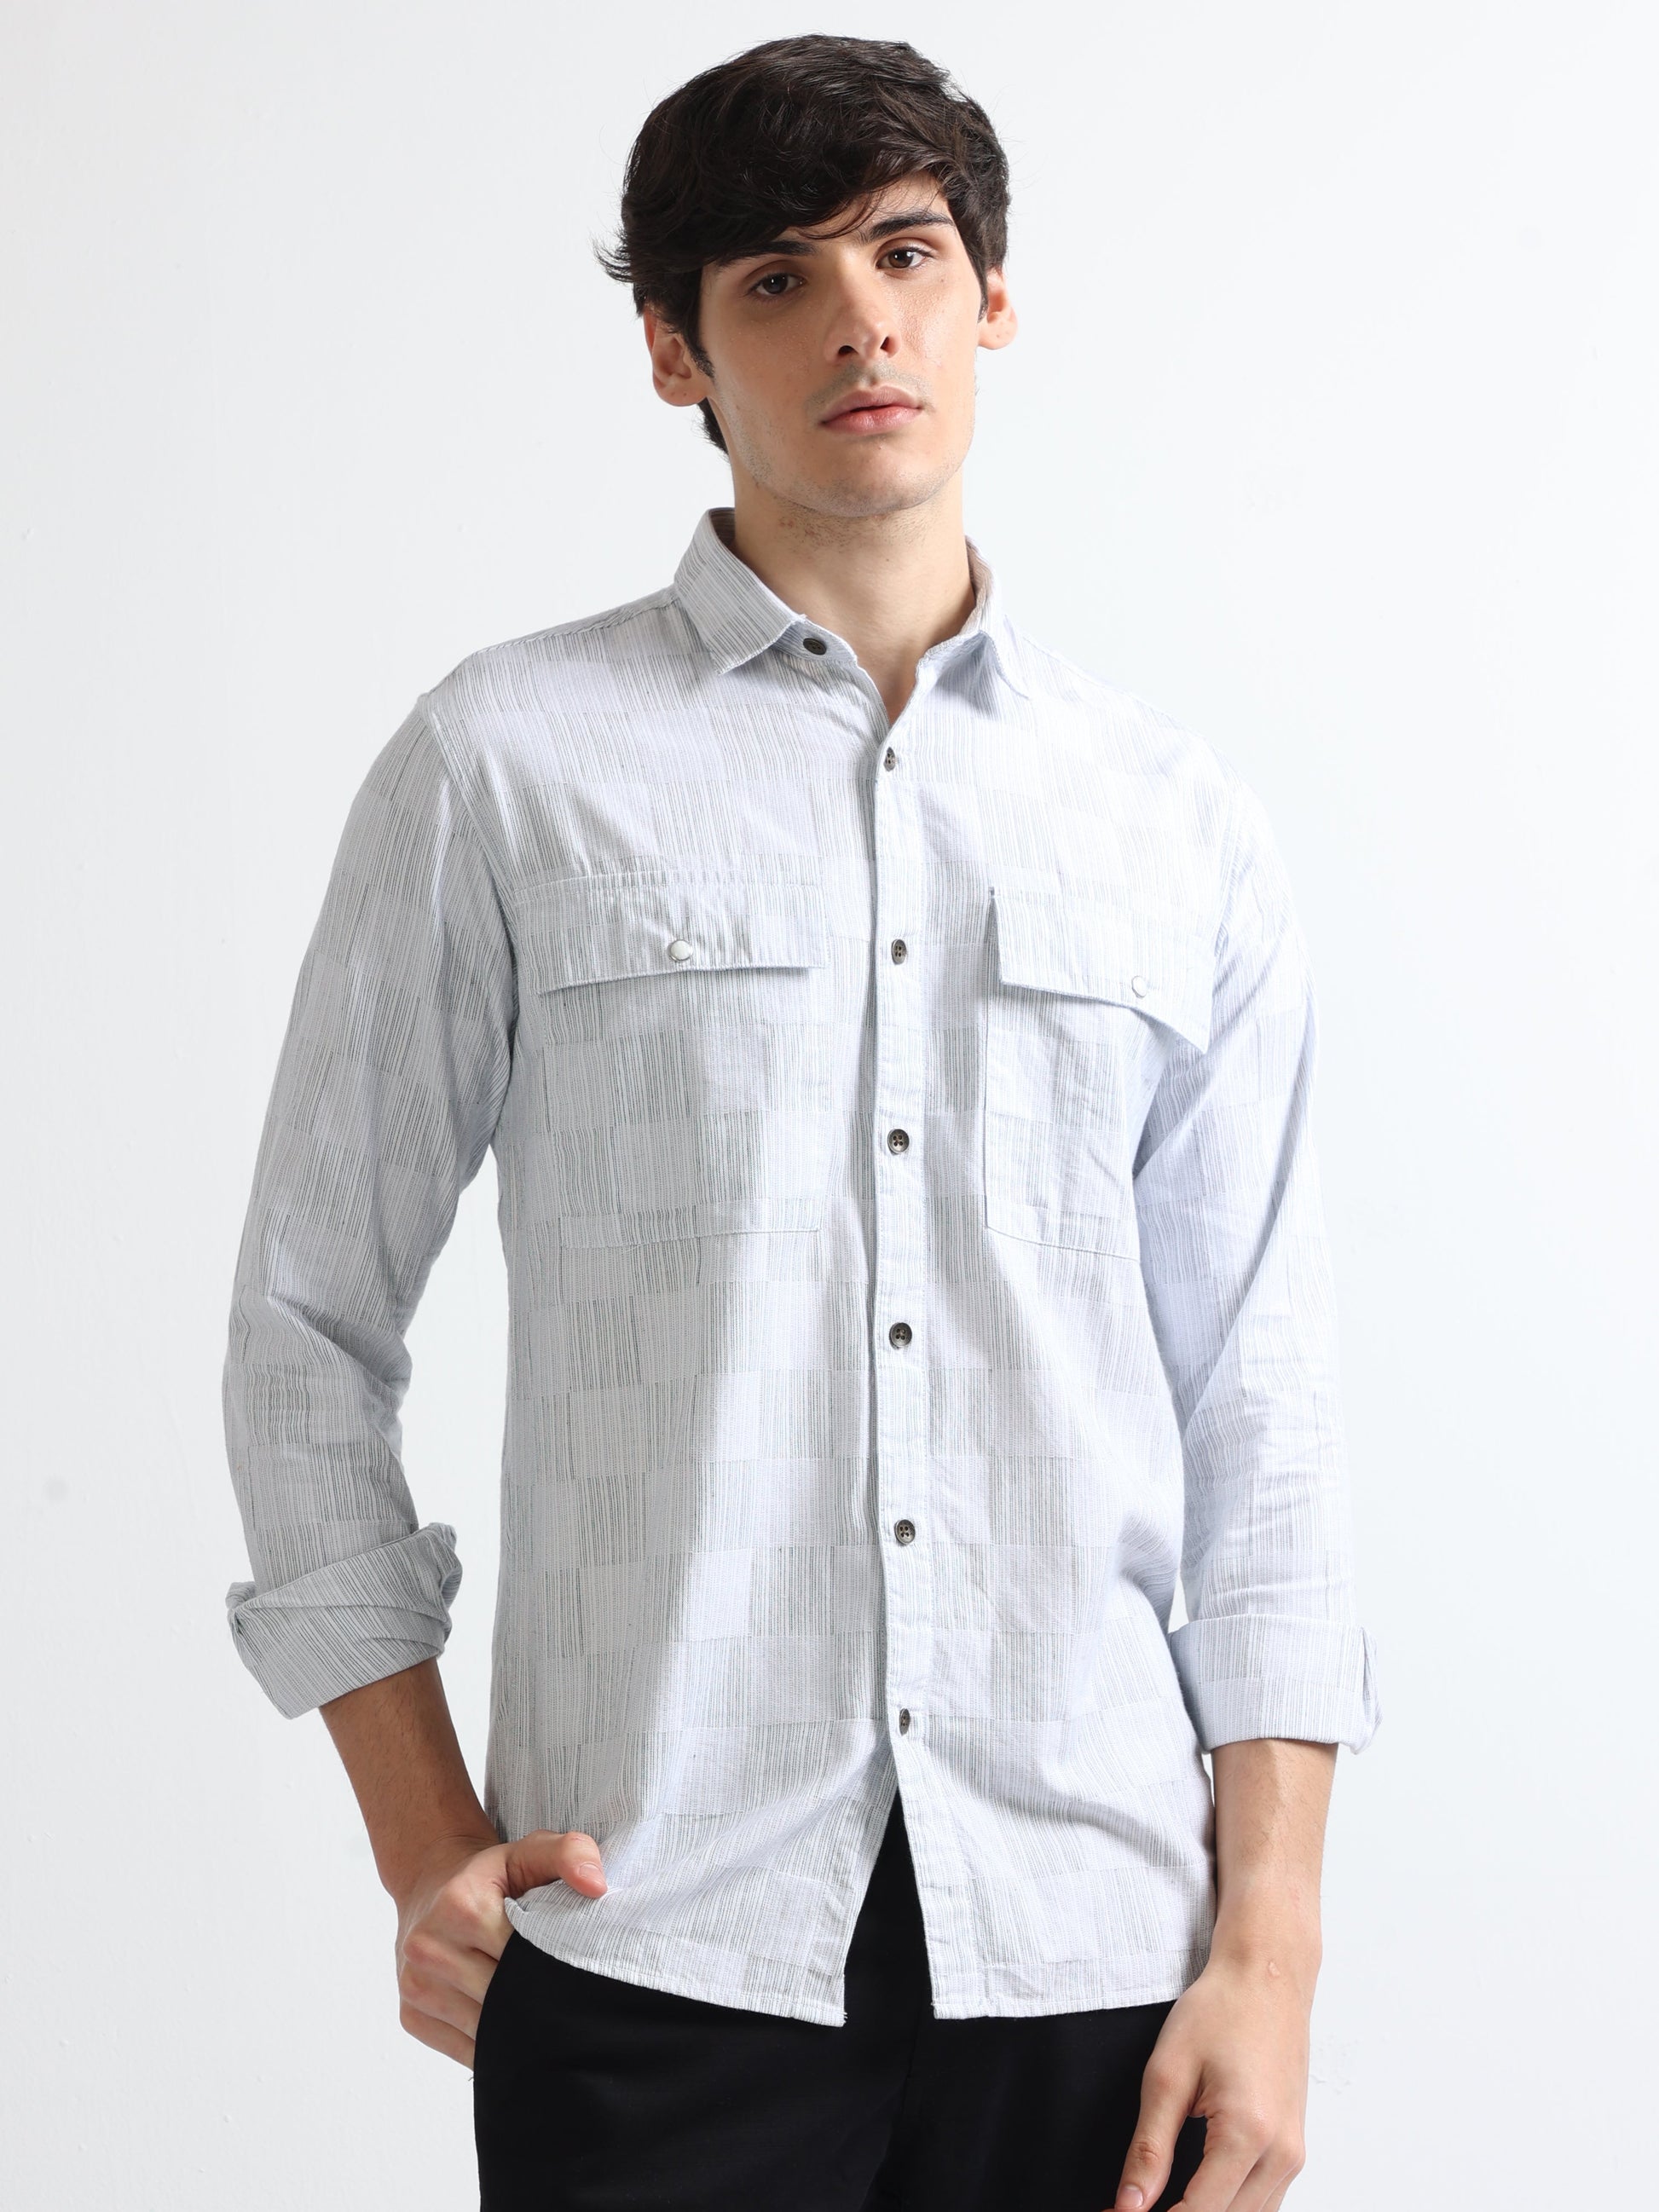 Buy Snap Button Double Pocket White Indigo Checked Shirt Online.